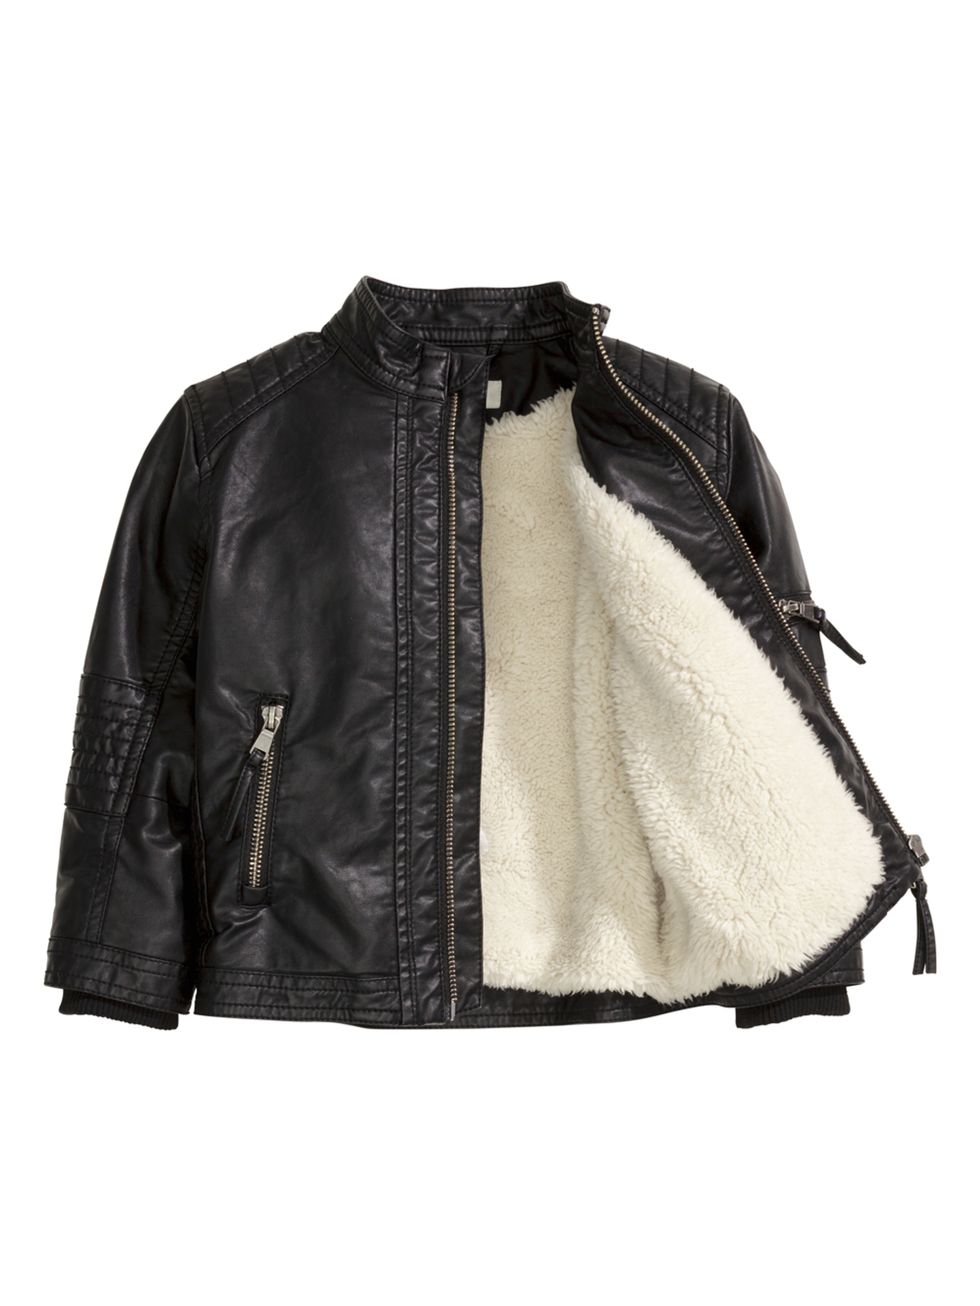 Jacket, Textile, Outerwear, Collar, Fashion, Black, Beige, Leather, Leather jacket, Fashion design, 